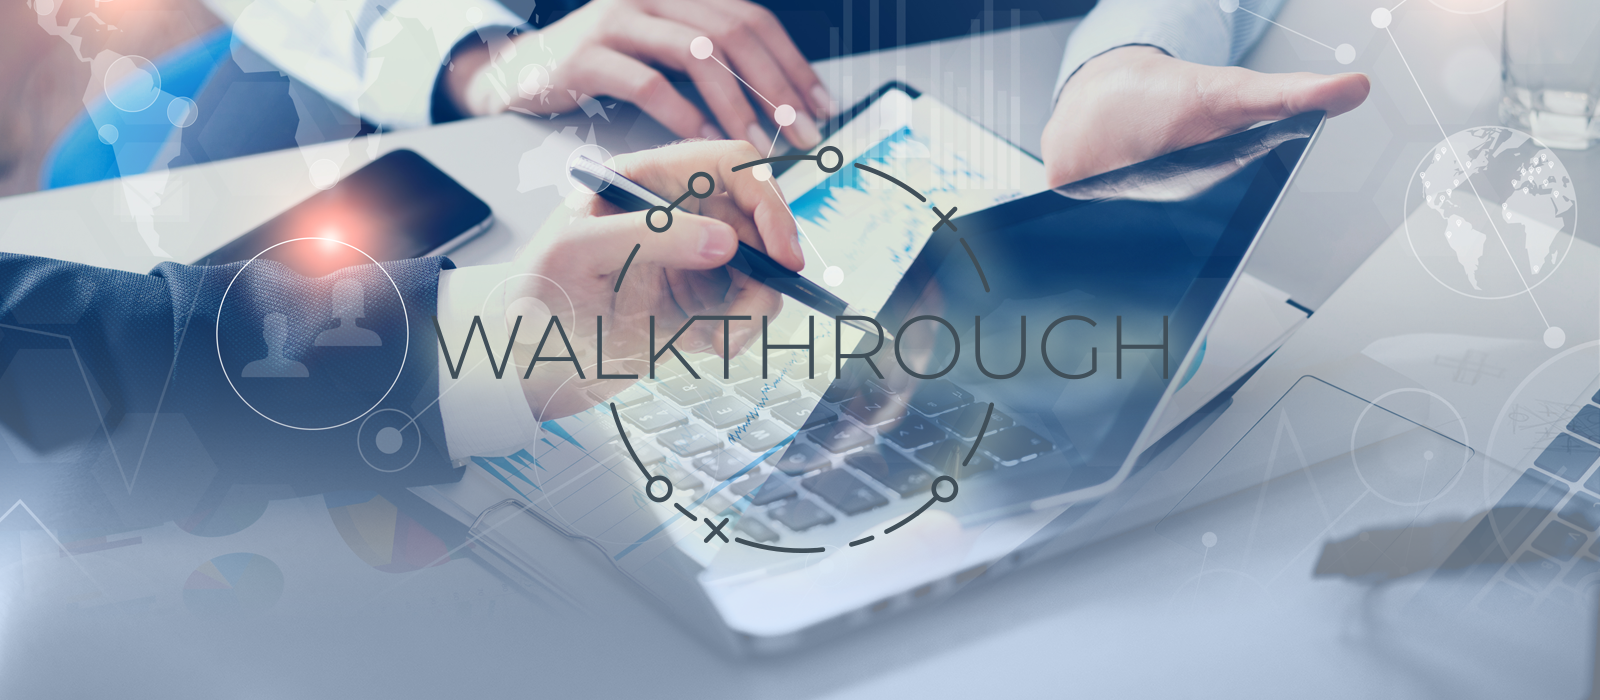 Walkthrough blog header